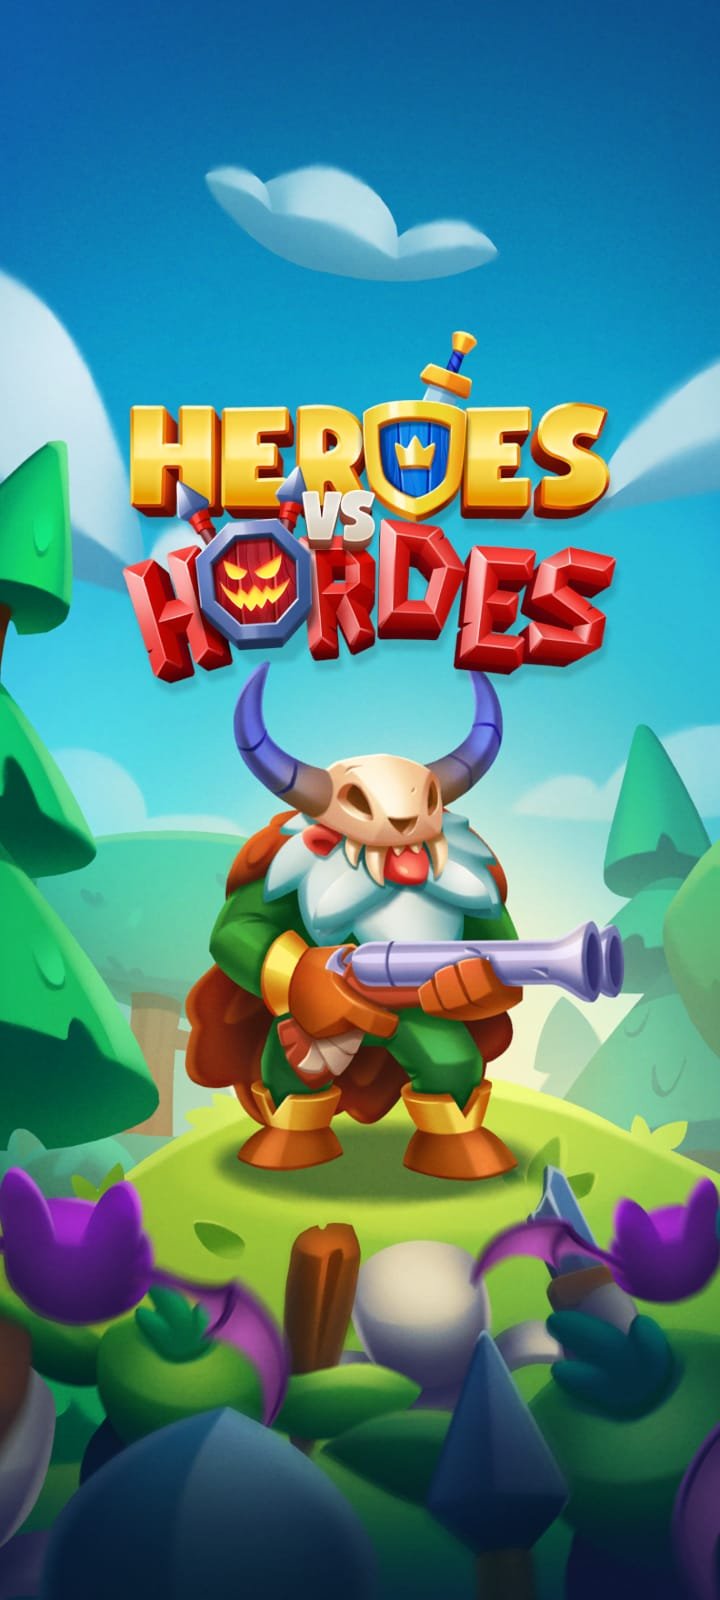 Heroes vs Hordes review main loading screen